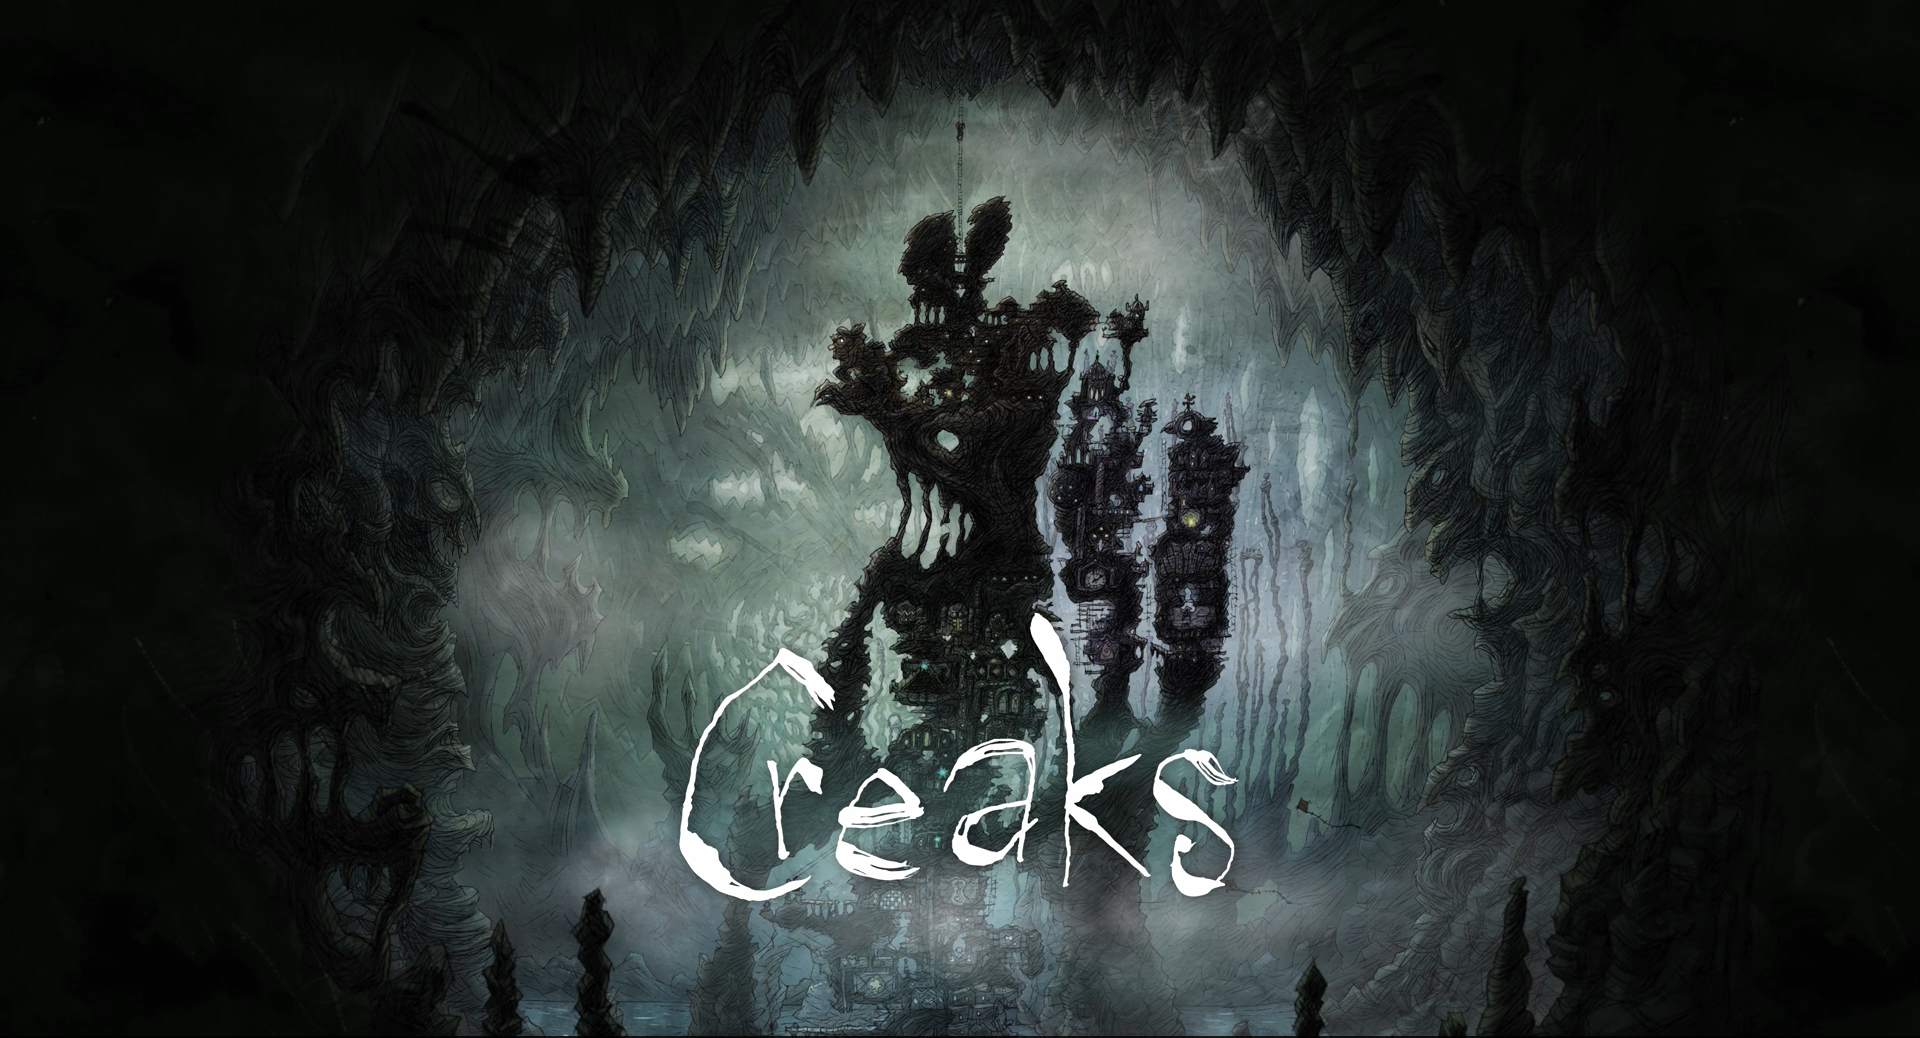 Creaks — хоррор-адвенчура от авторов Samorost и Machinarium